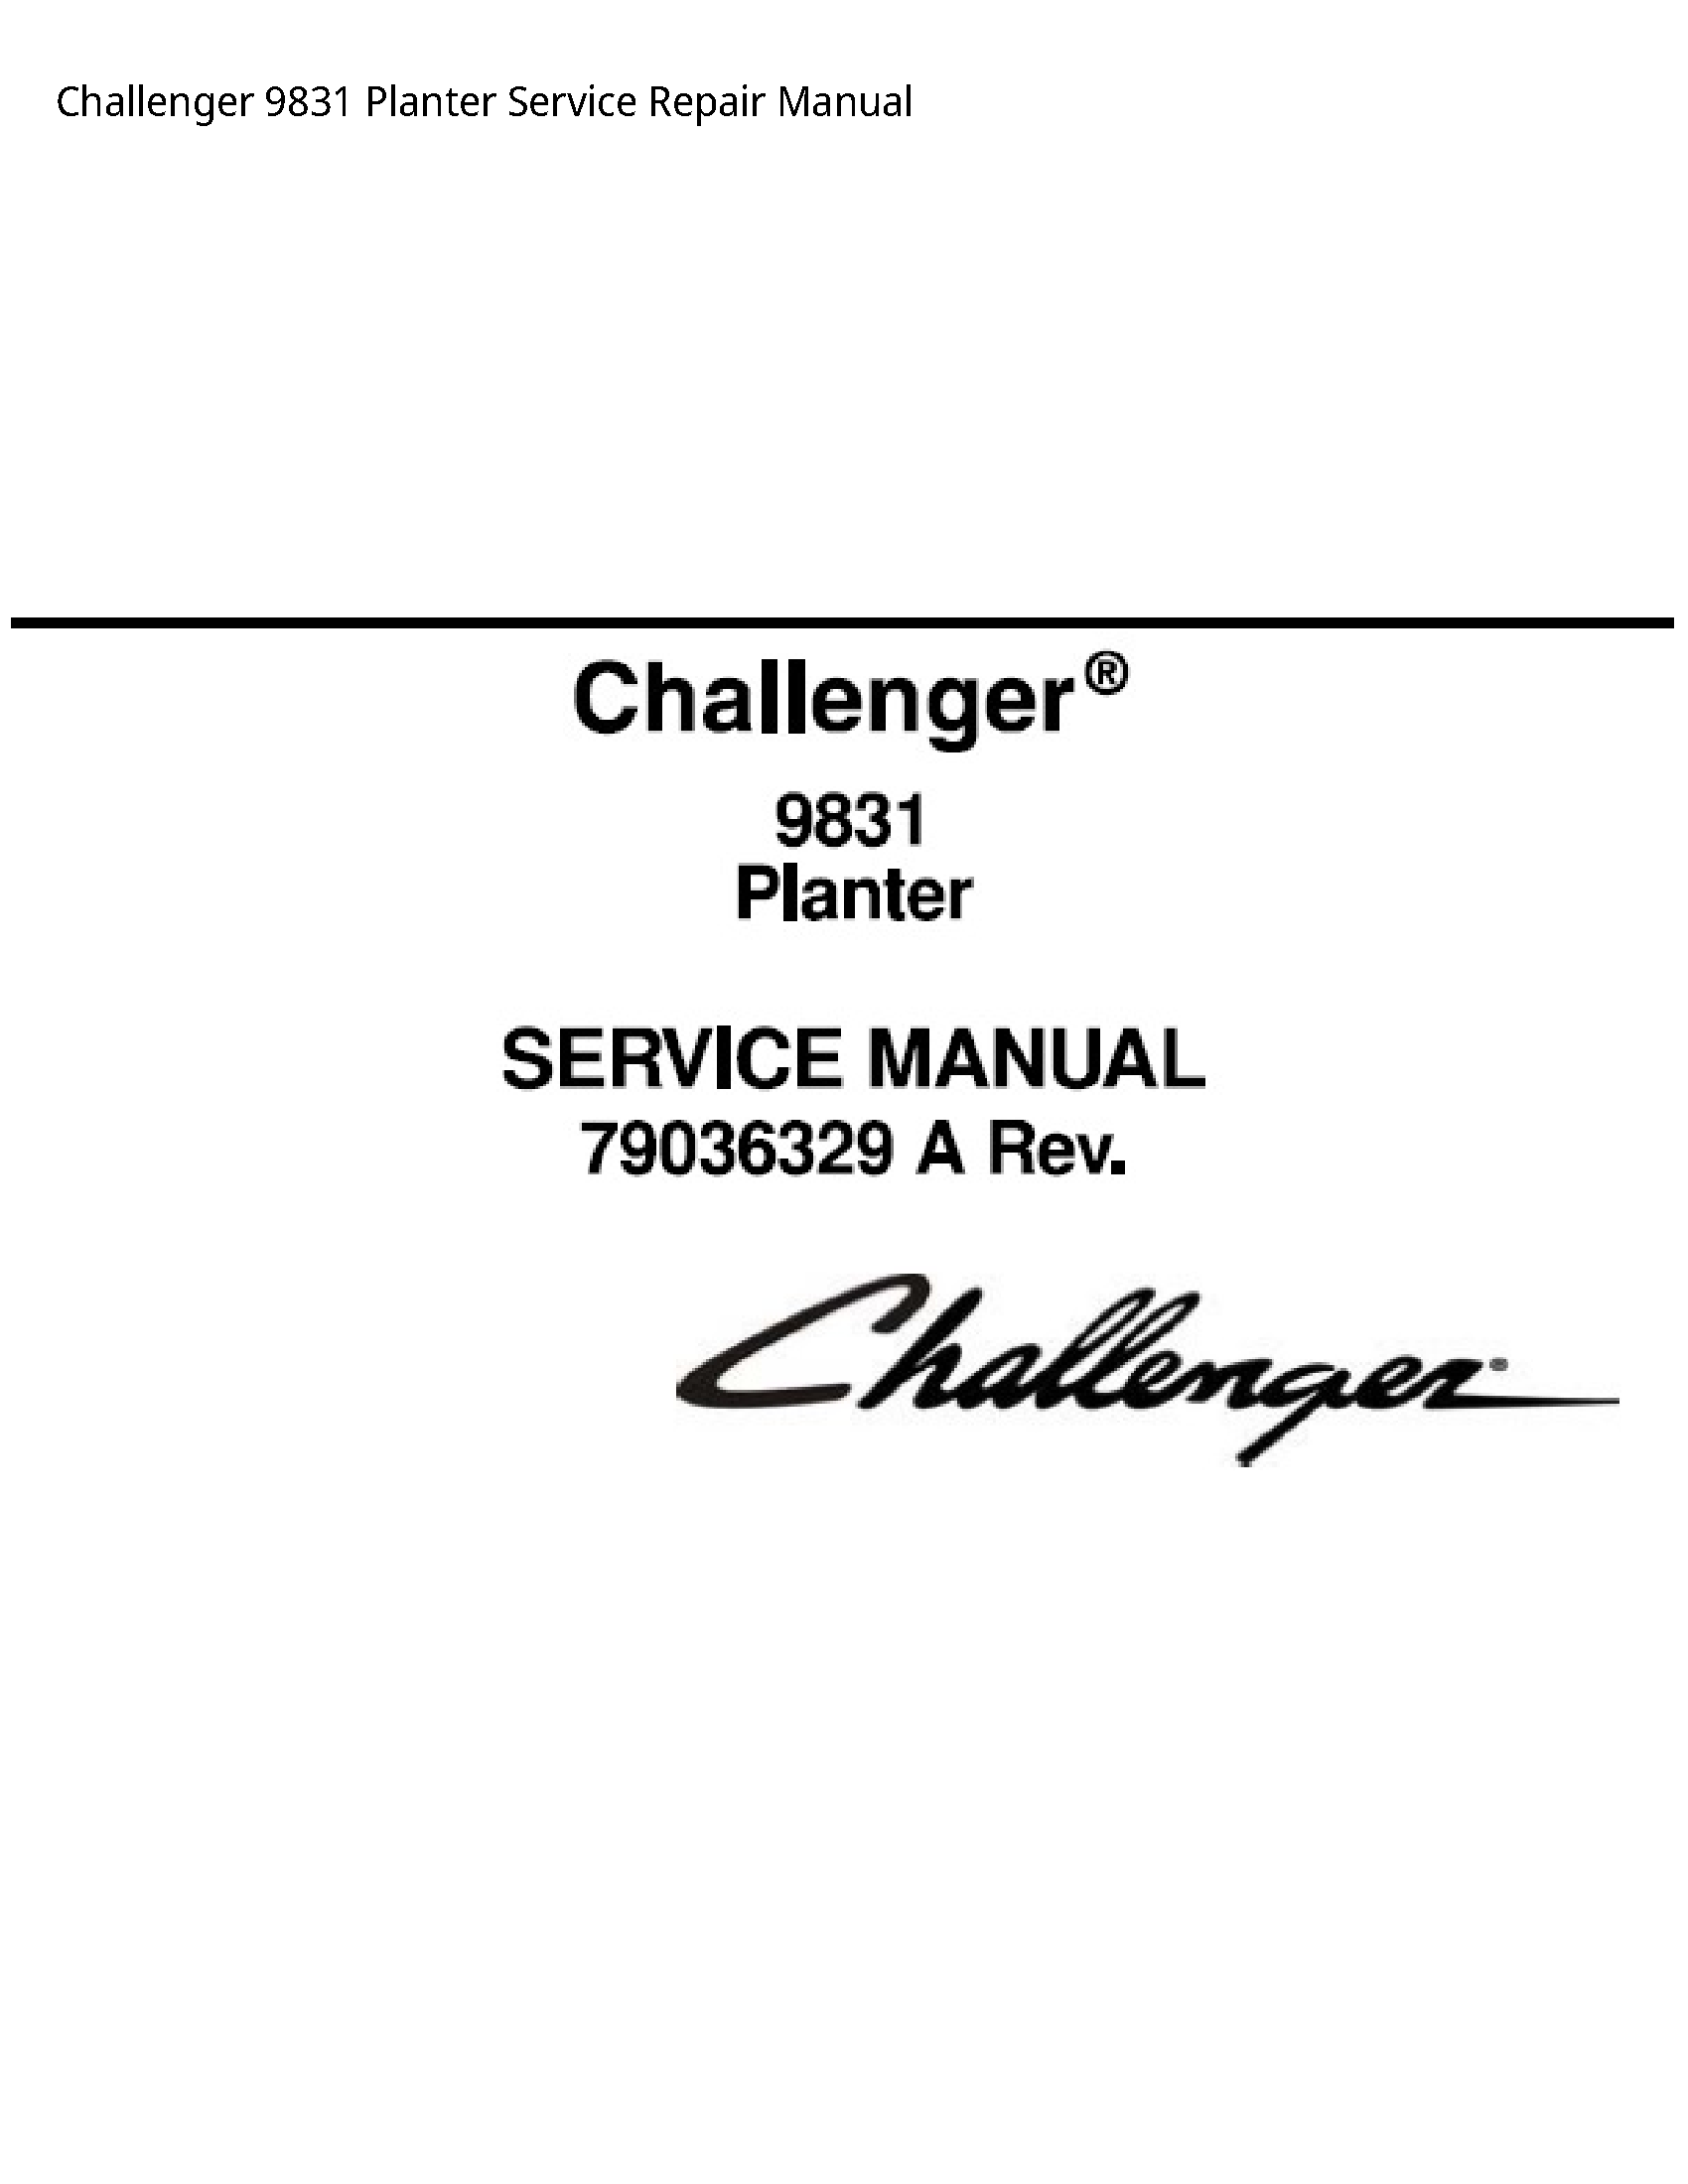 Challenger 9831 Planter manual